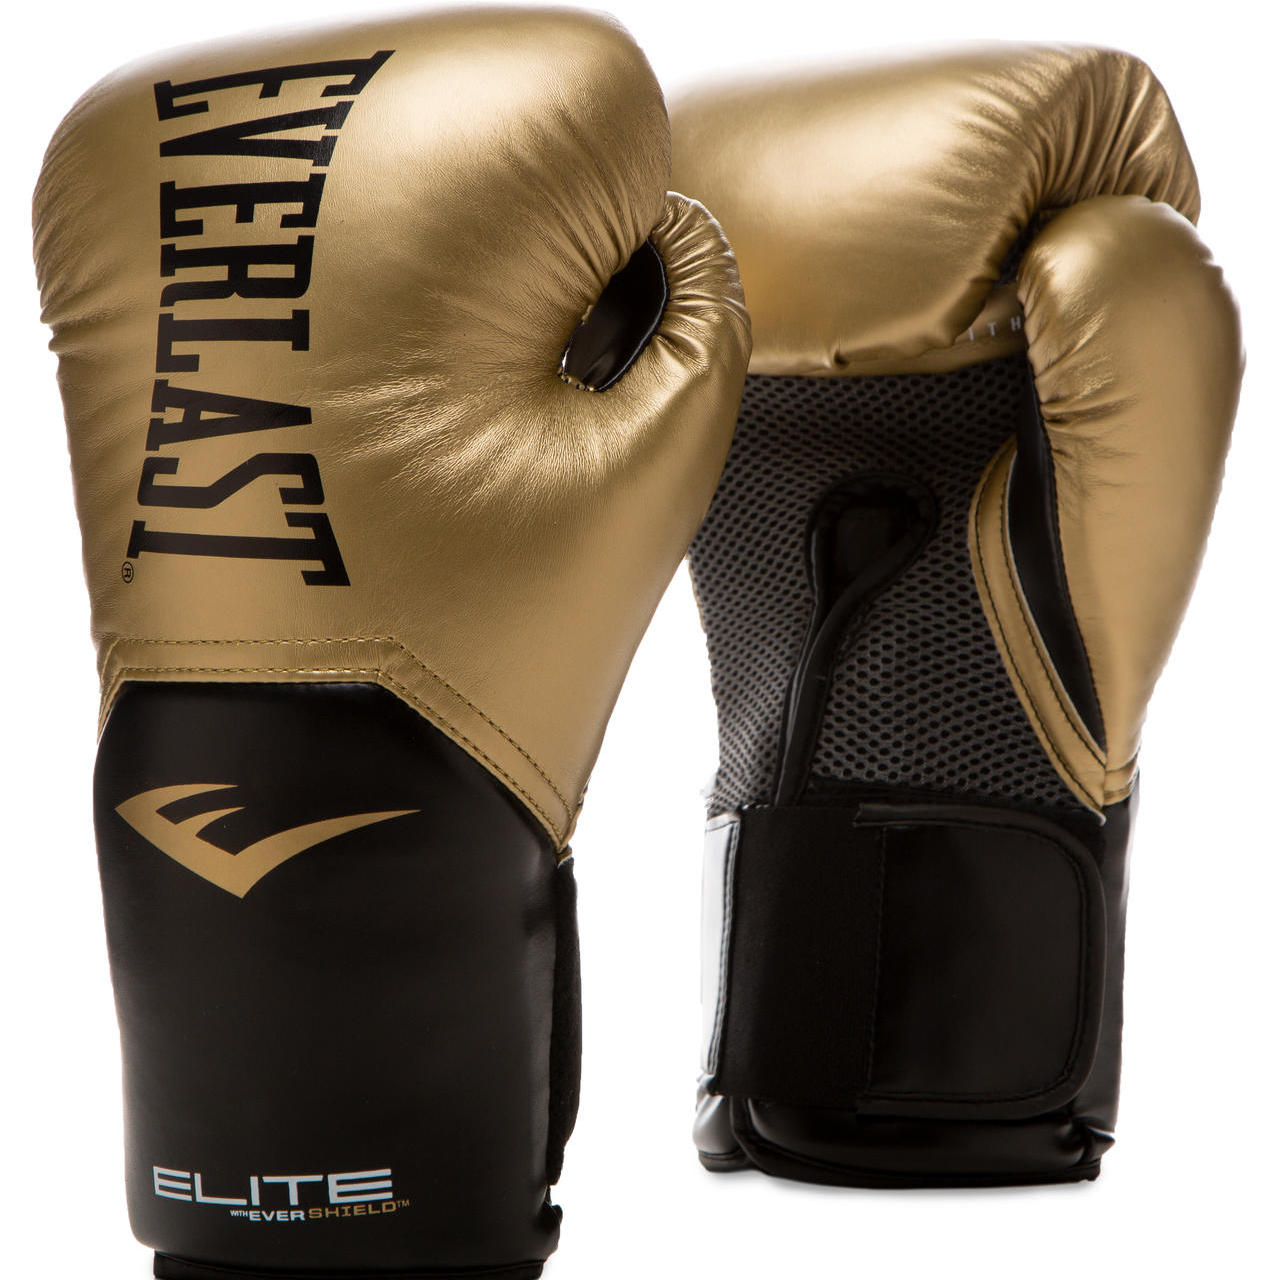  Боксерские перчатки Everlast ELITE PROSTYLE золотые 